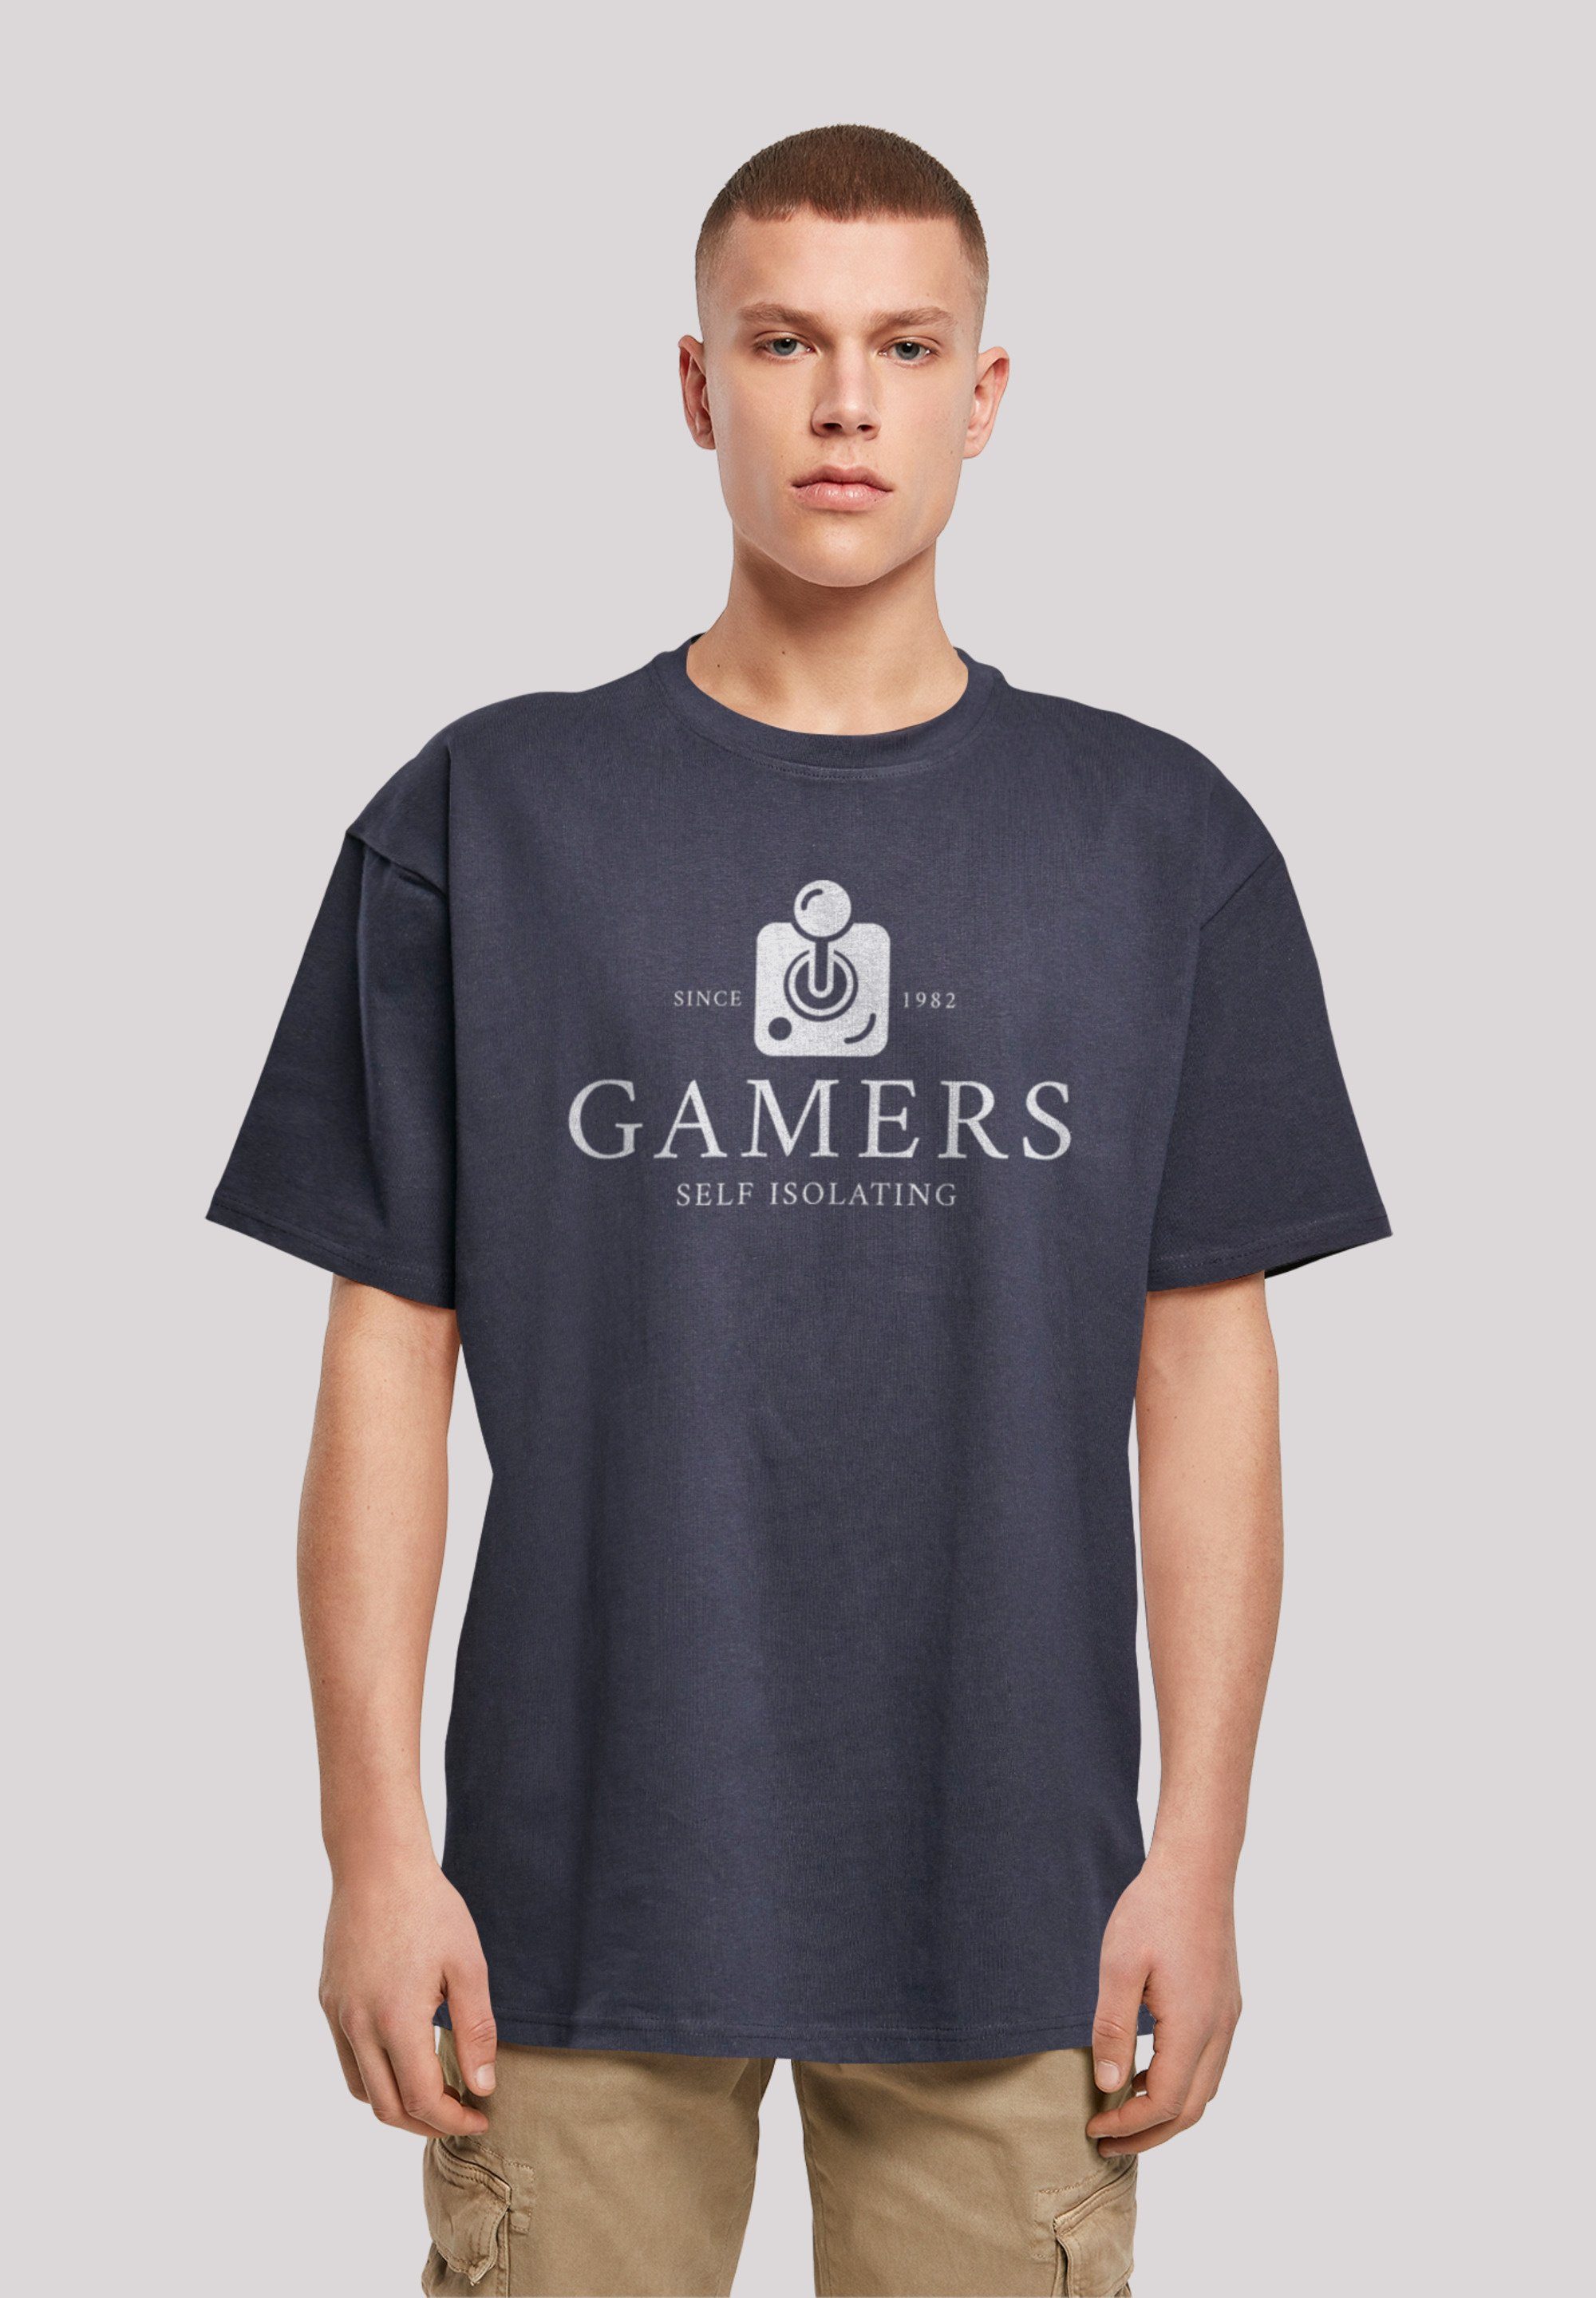 Gaming Print Gamers T-Shirt Isolating Self SEVENSQUARED Retro F4NT4STIC navy